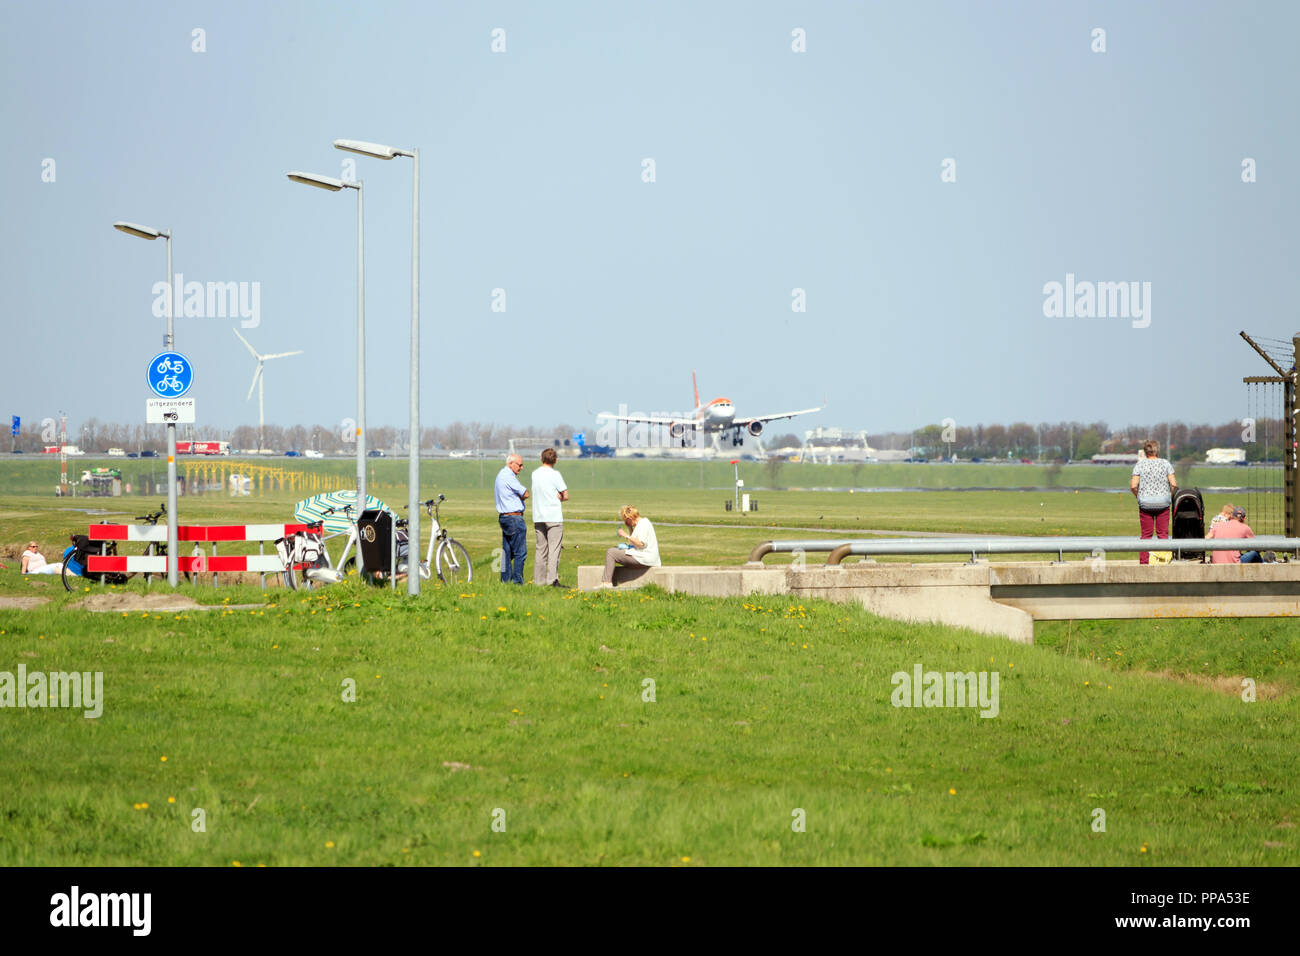 Amsterdam, Netherlands - April 18, 2018: People Plane Spotting At De  Polderbaan Runway Stock Photo - Alamy